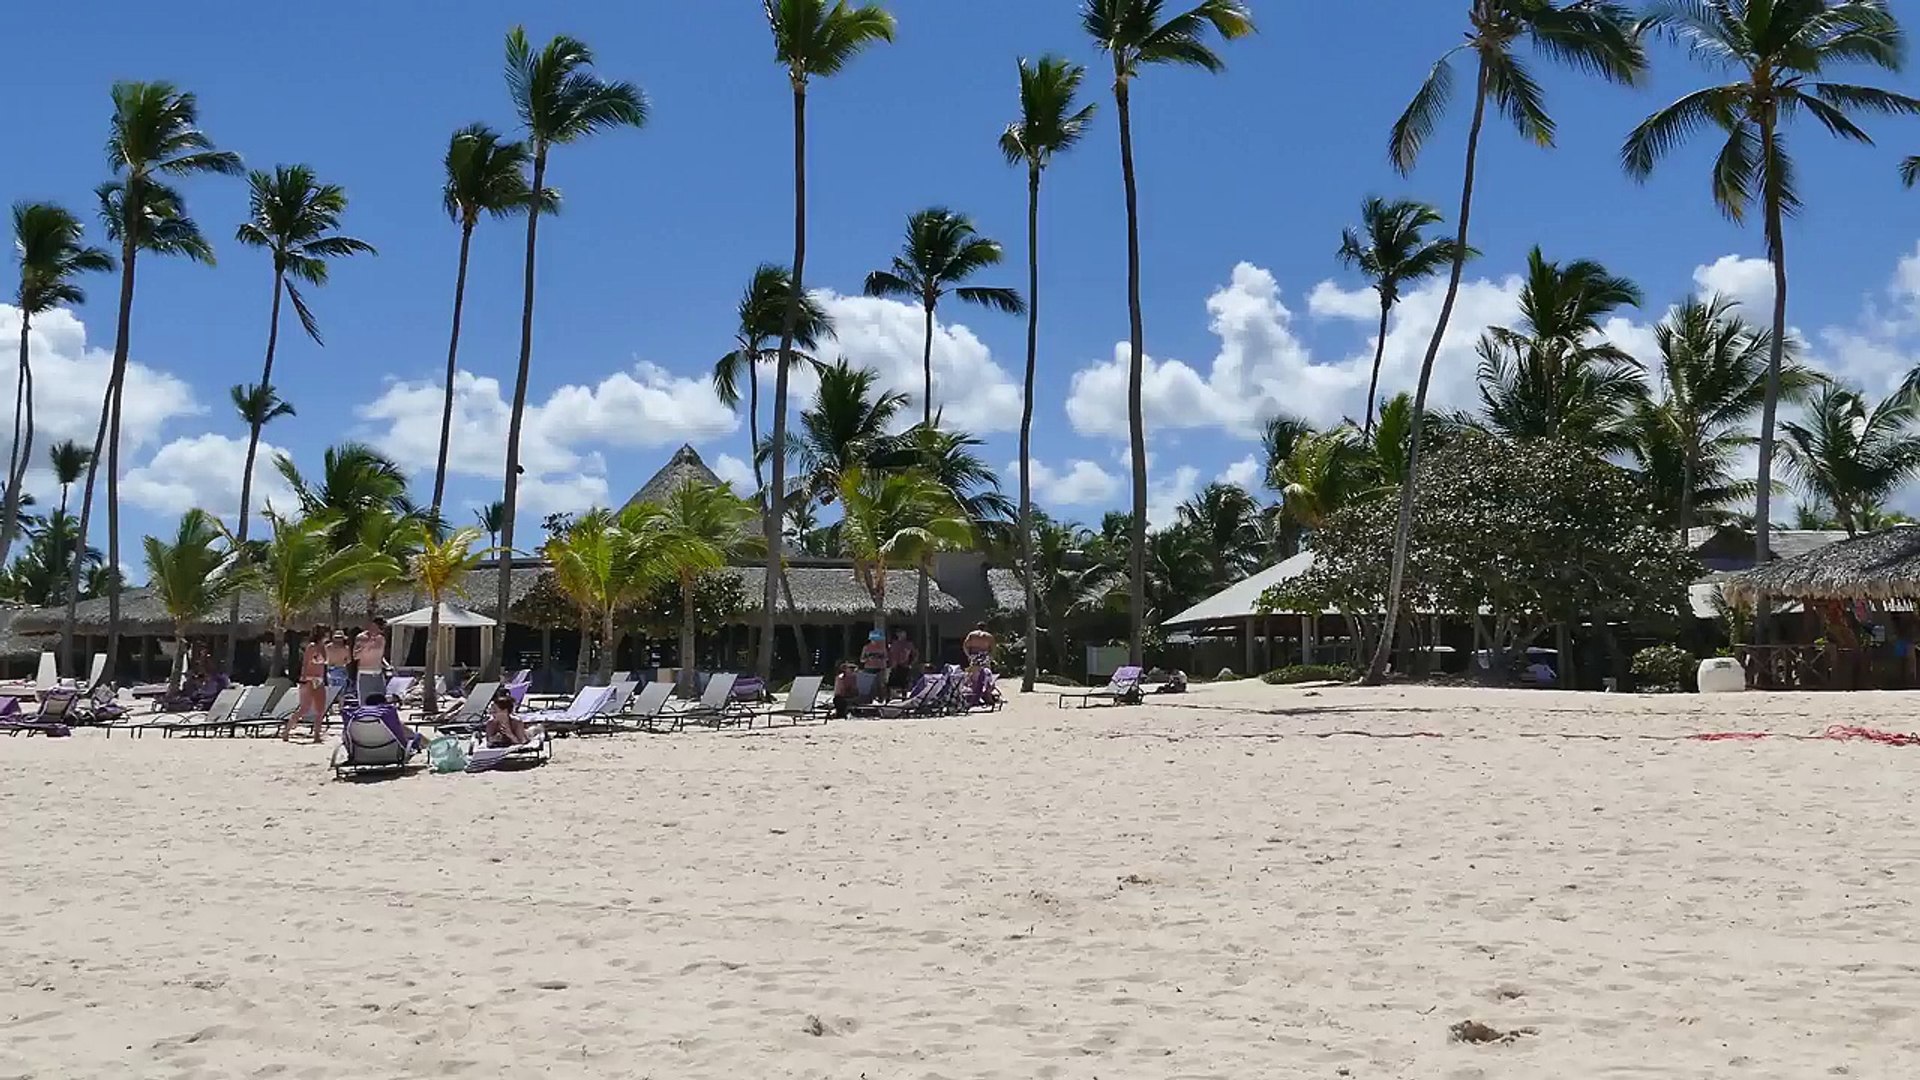 Paradisus Punta Cana- huge beach restaurant and bar 4K HD